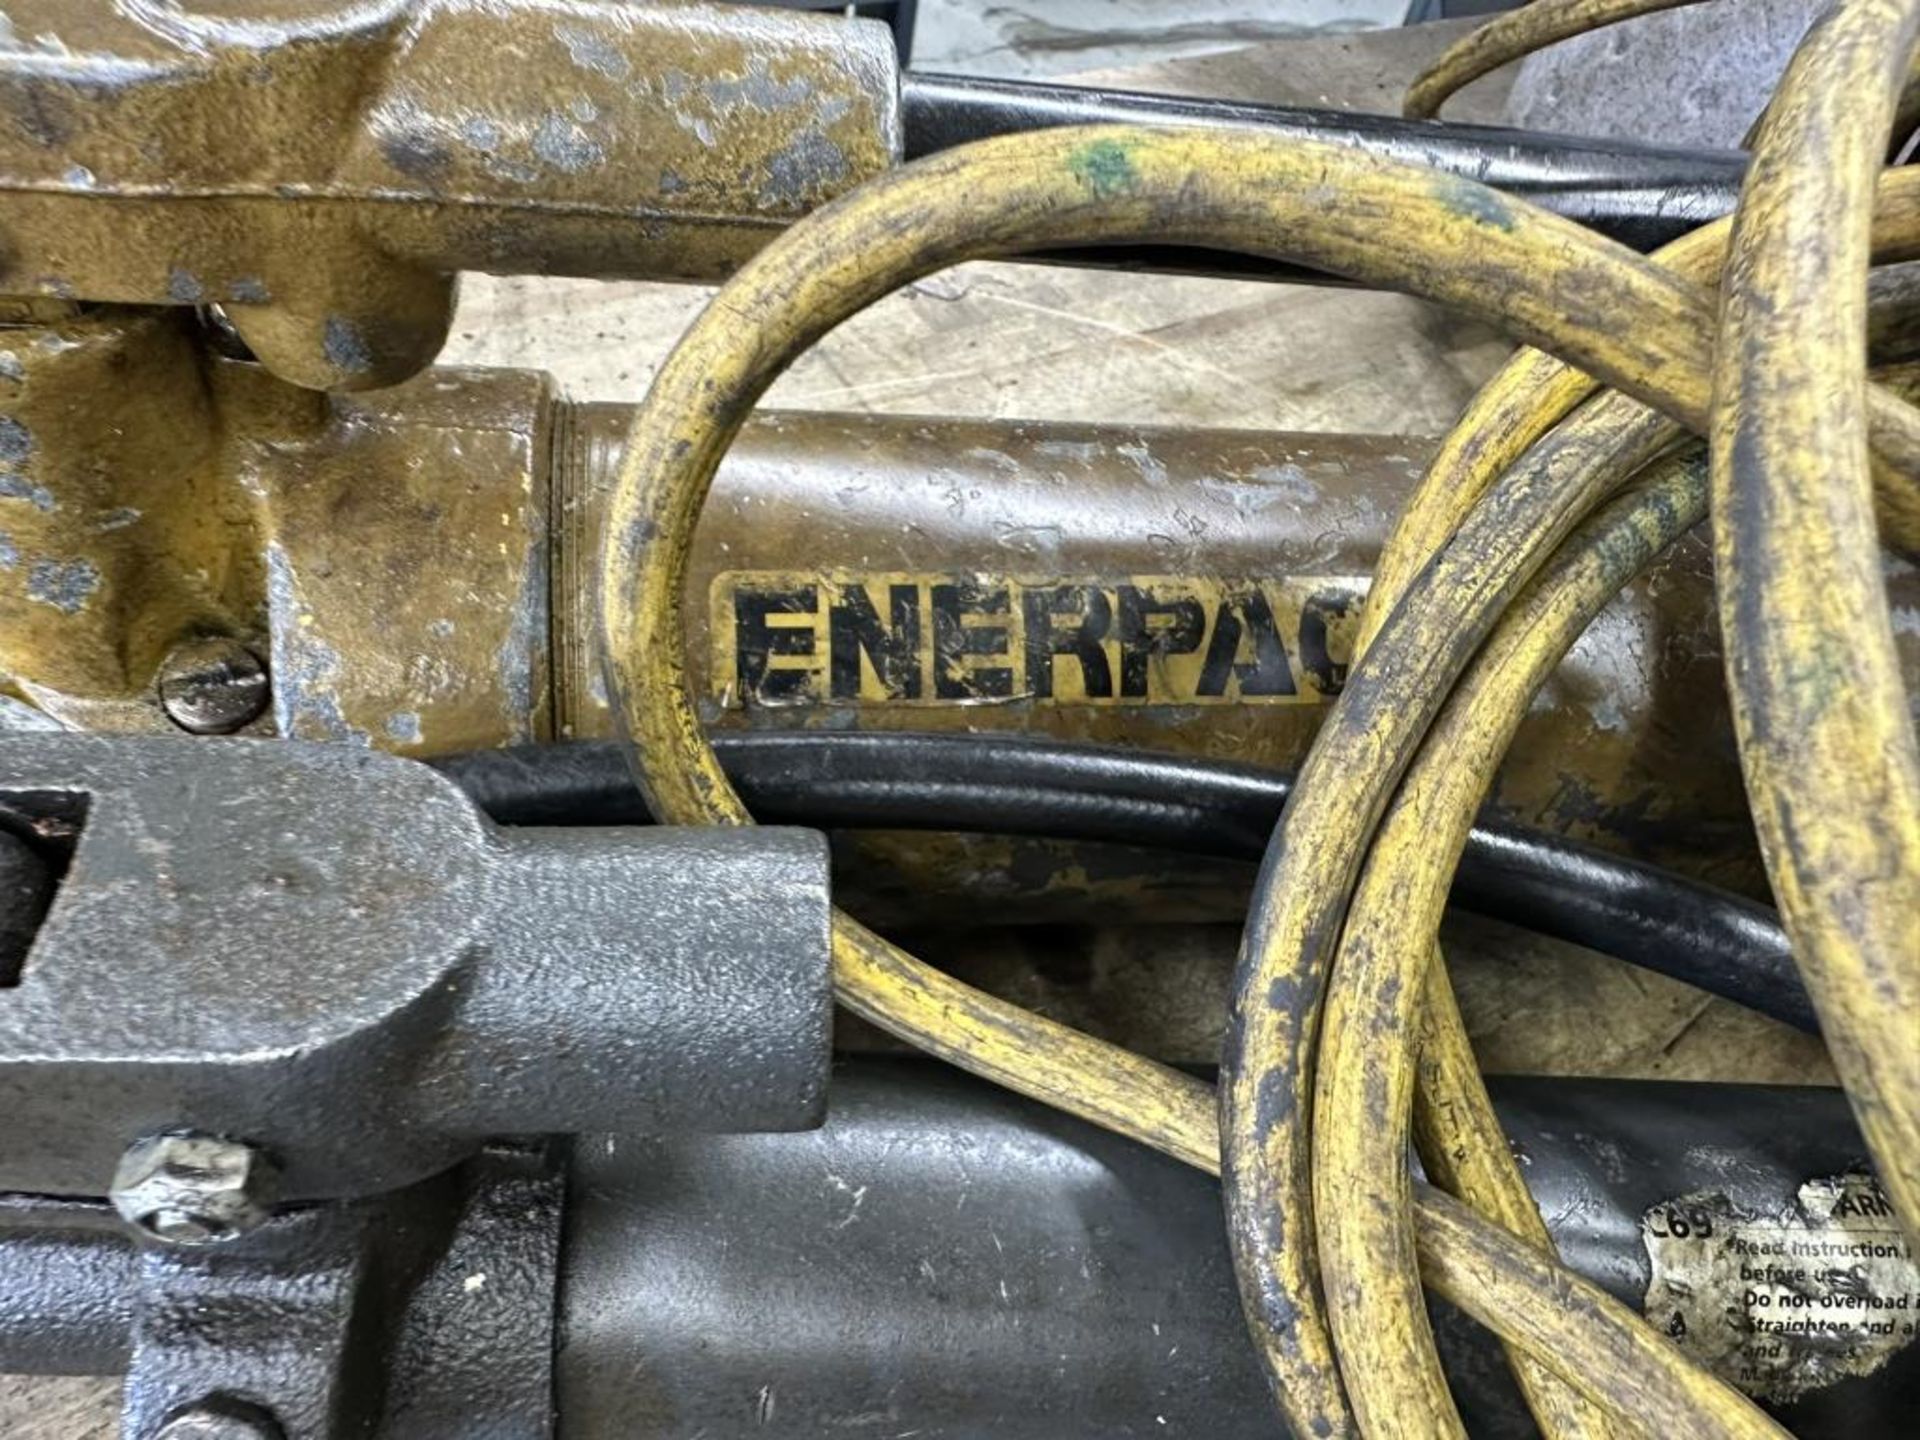 Enerpac Hydraulic Hand Pump - Image 2 of 2